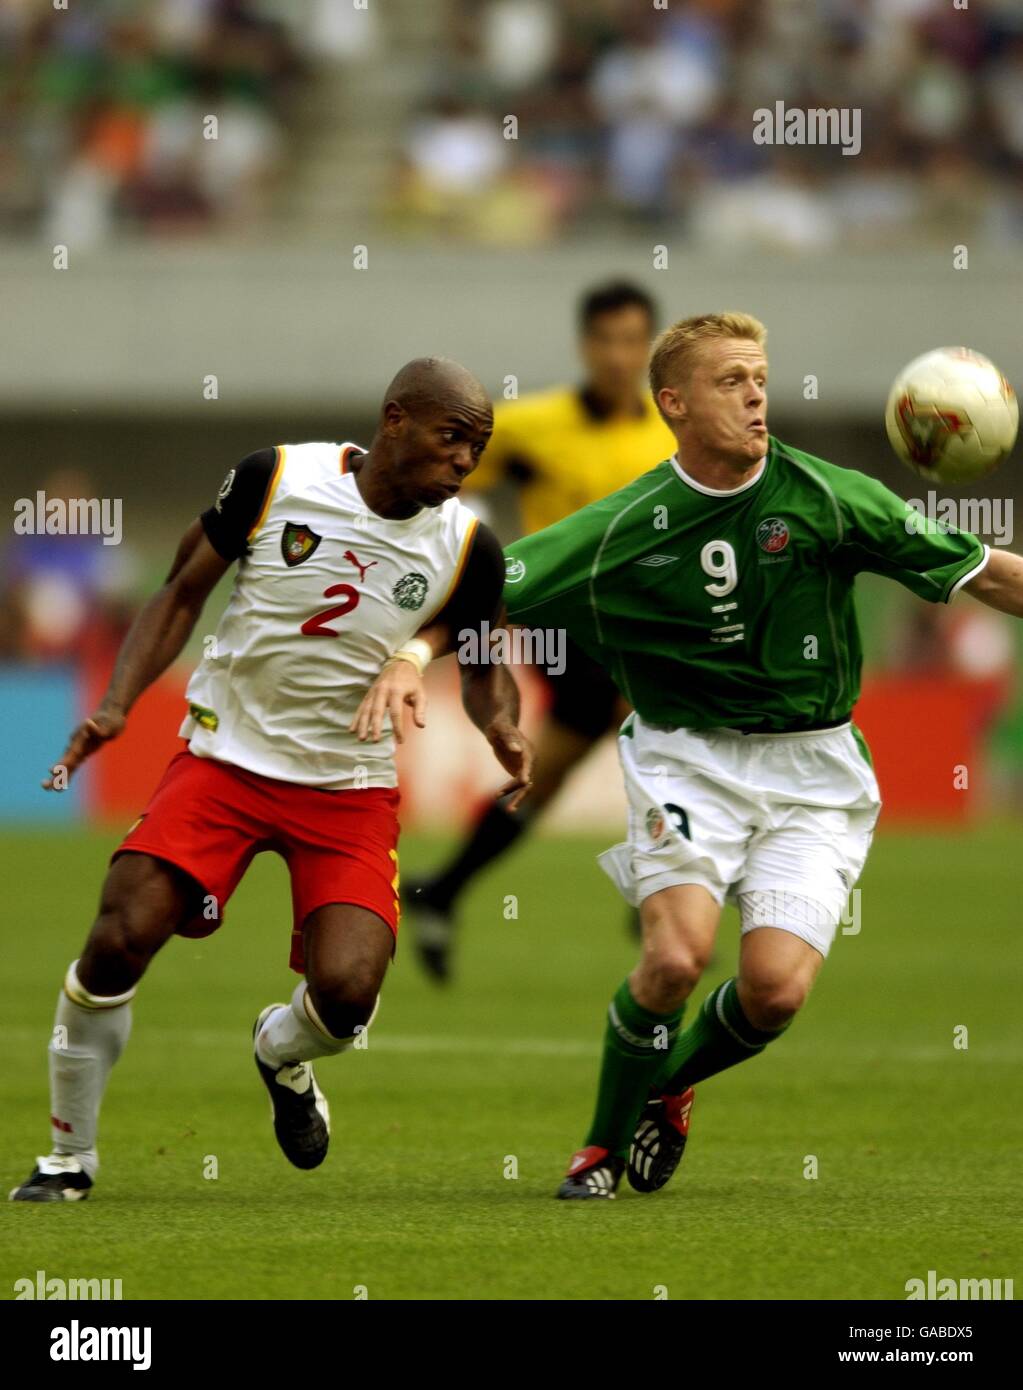 Fußball - FIFA World Cup 2002 - Gruppe E - Kamerun / Irland Stockfotografie  - Alamy